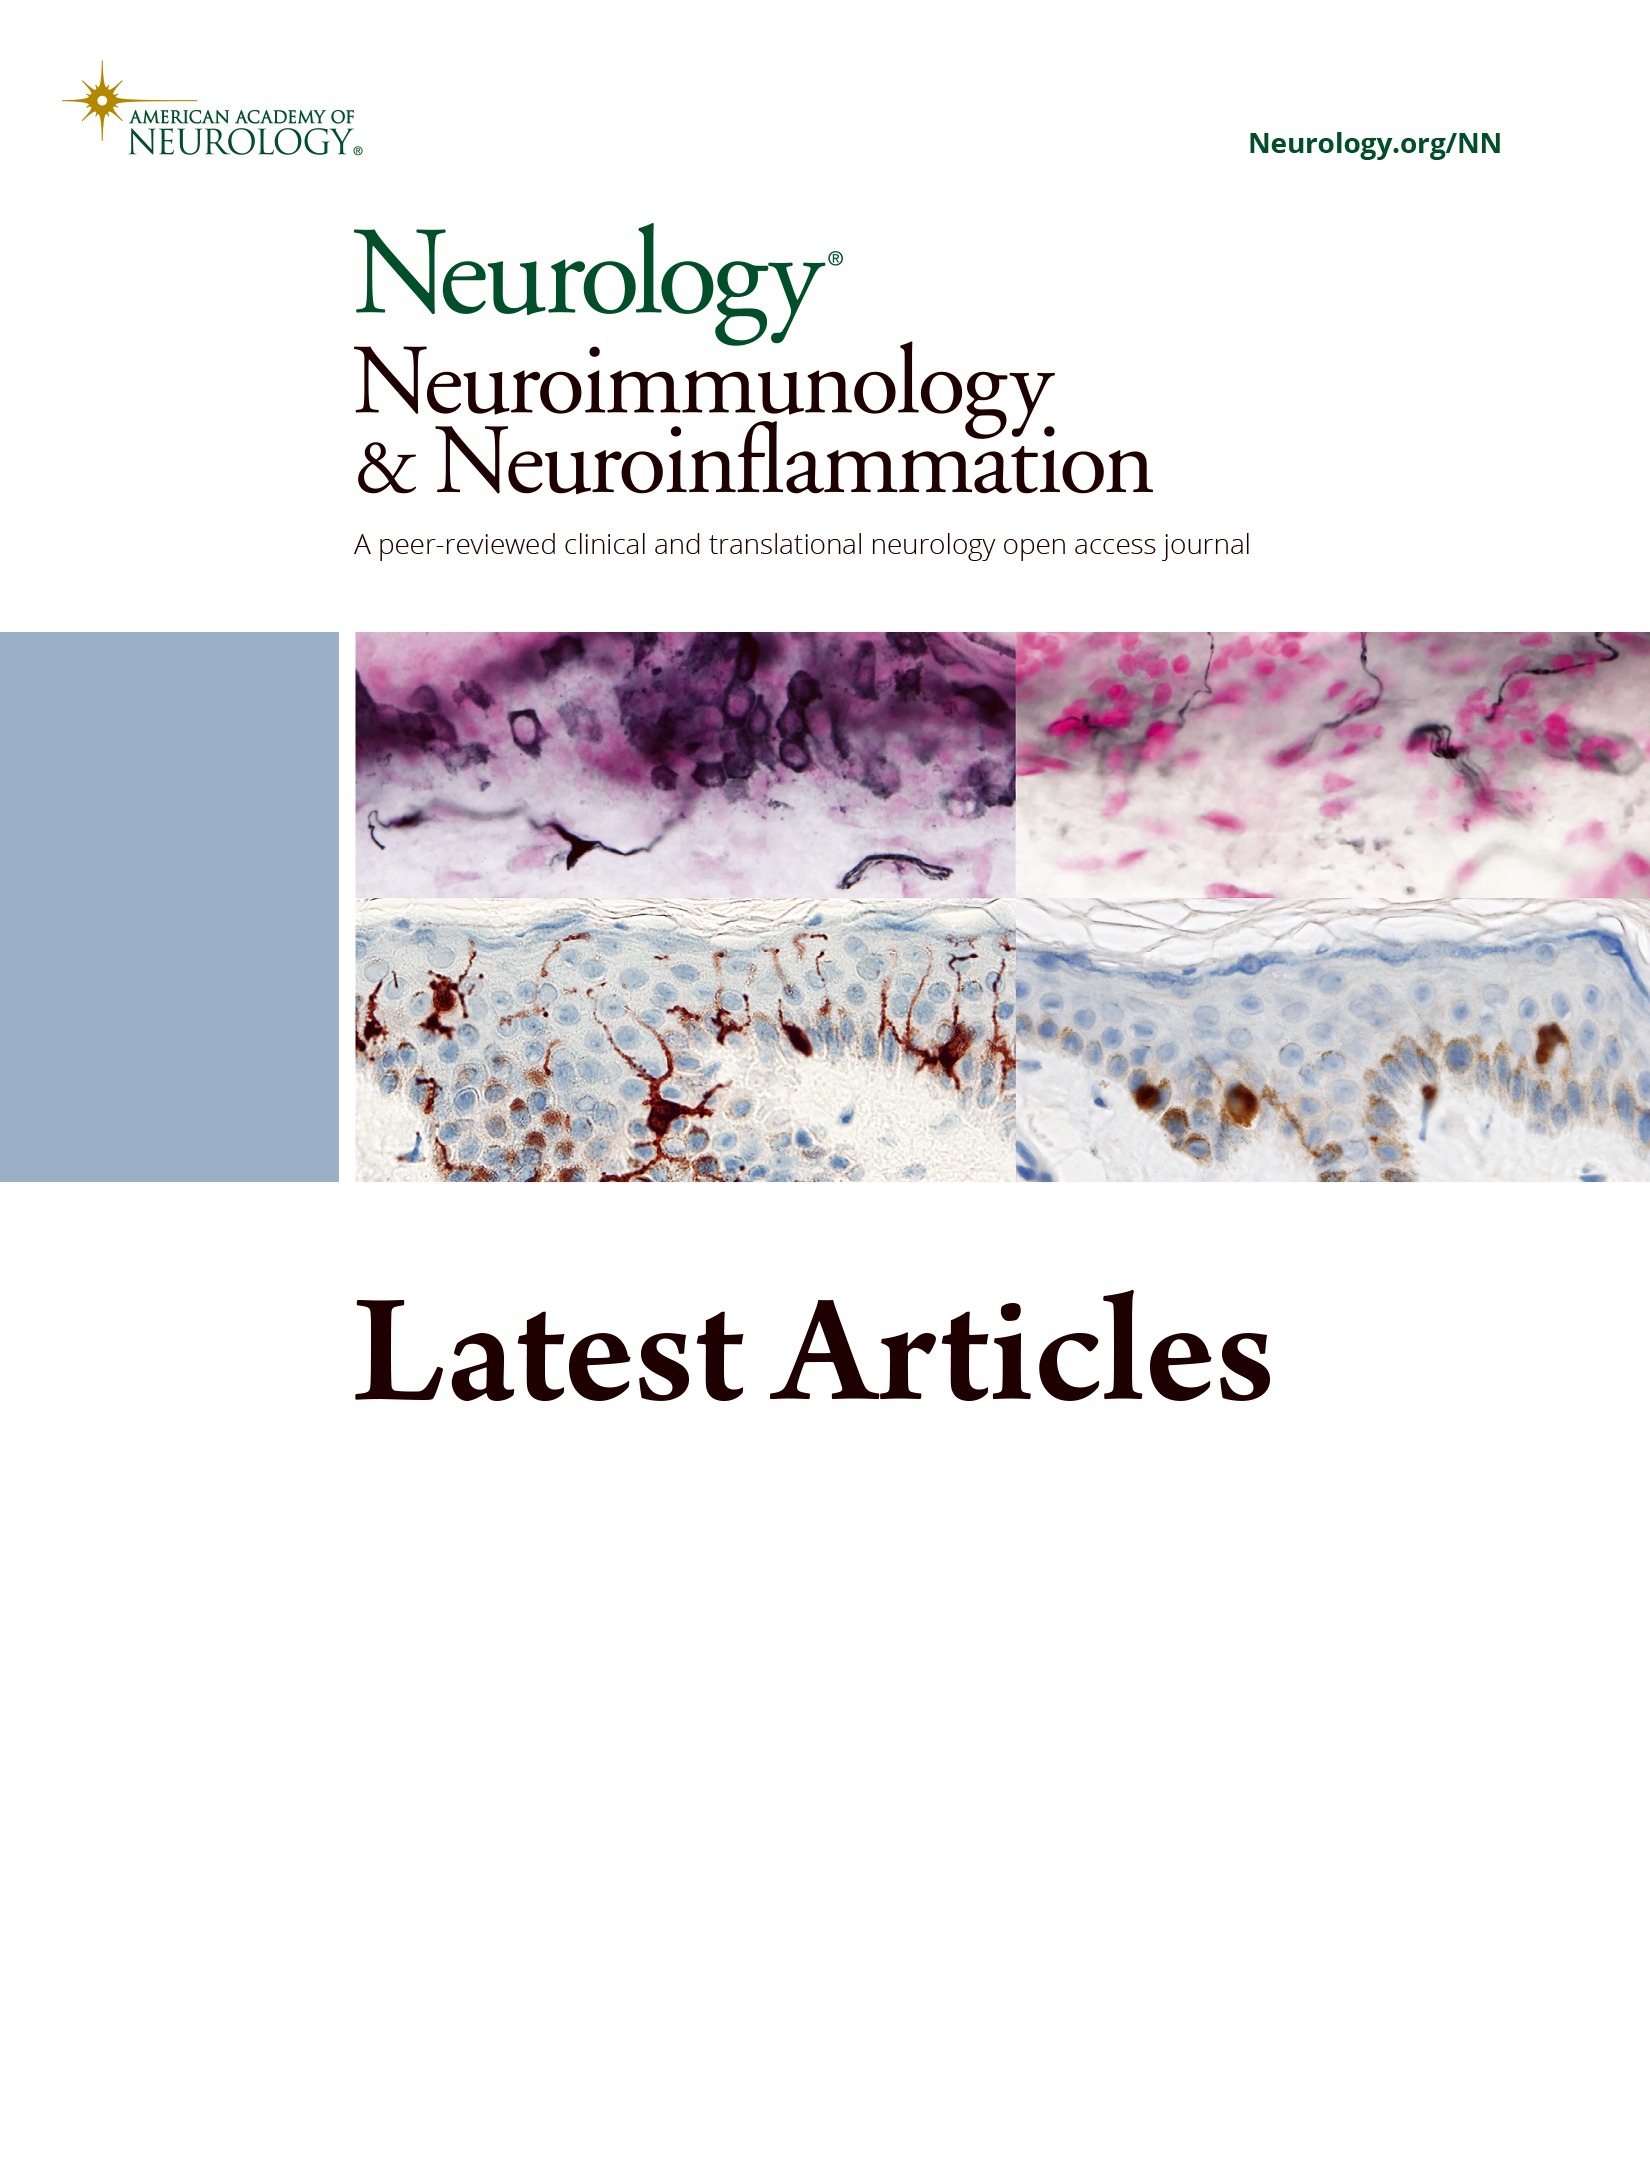 New Insights on DR and DQ Human Leukocyte Antigens in Anti-LGI1 Encephalitis